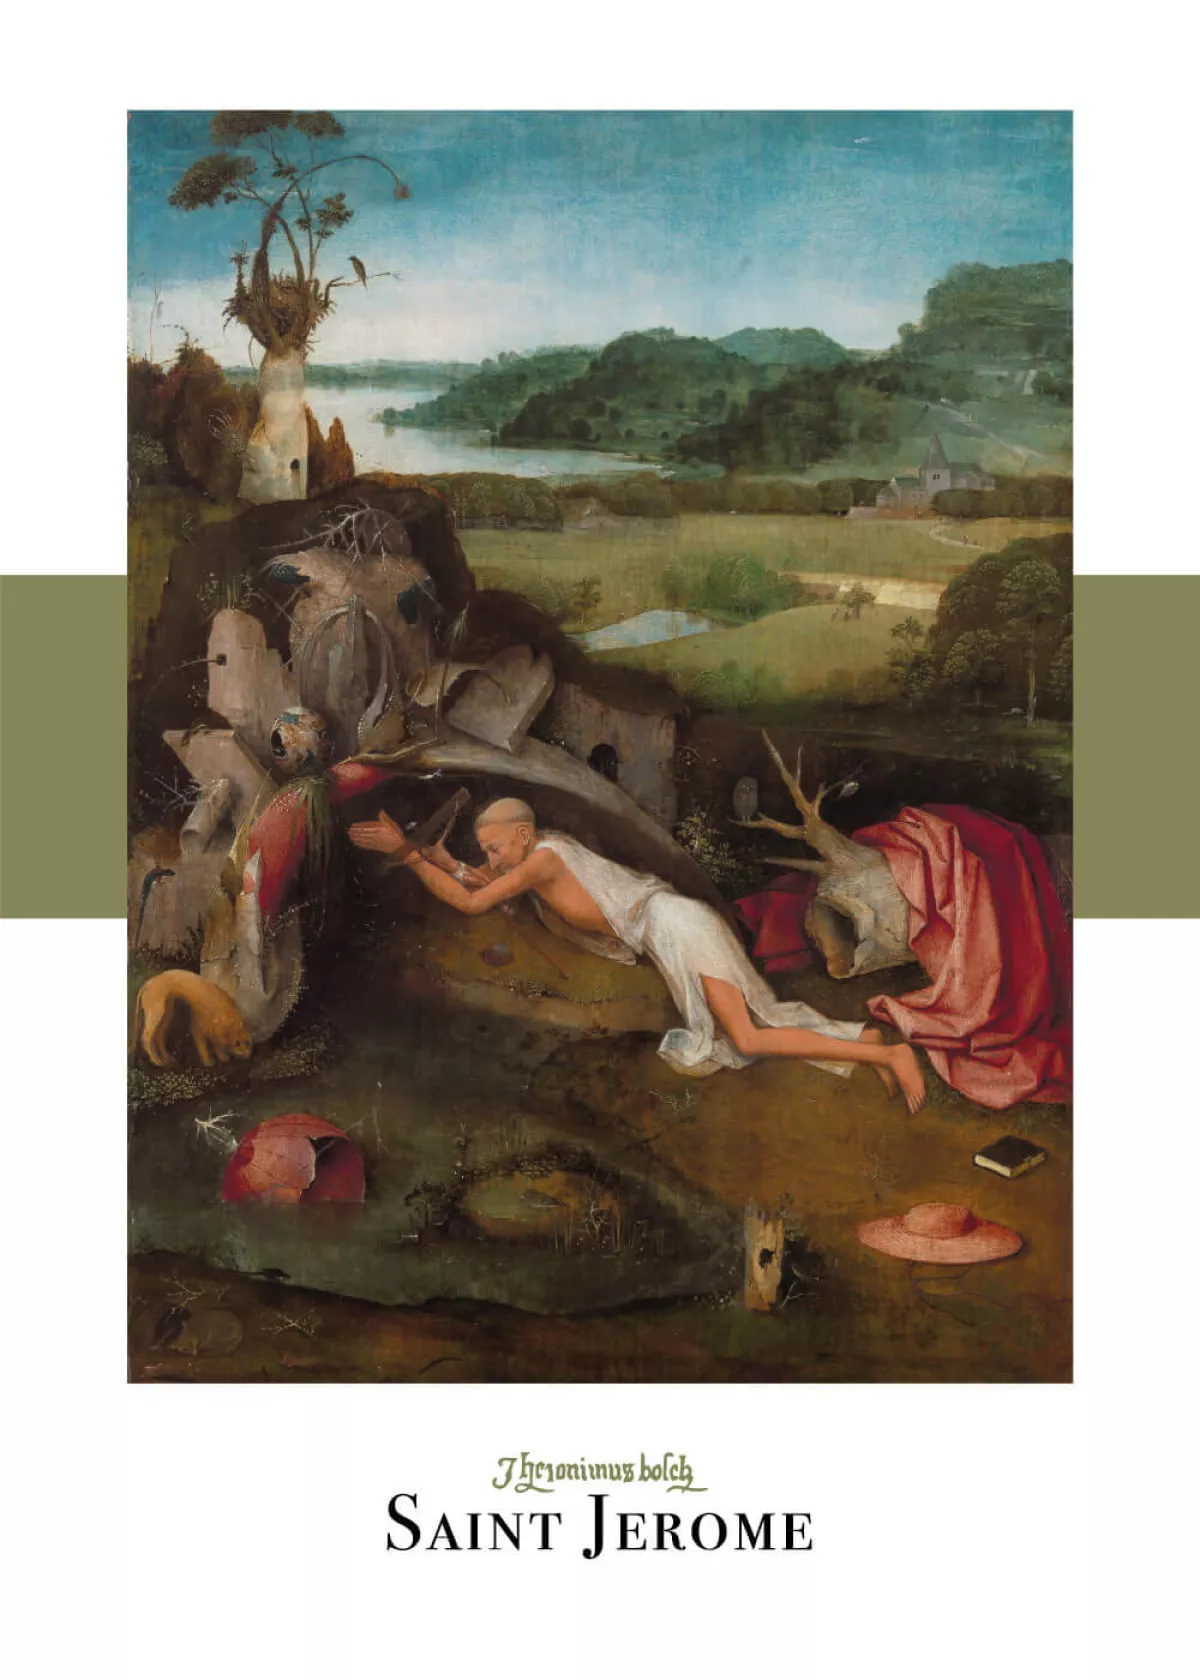 #1 - Saint jerome - Hieronymus Bosch museumsplakat